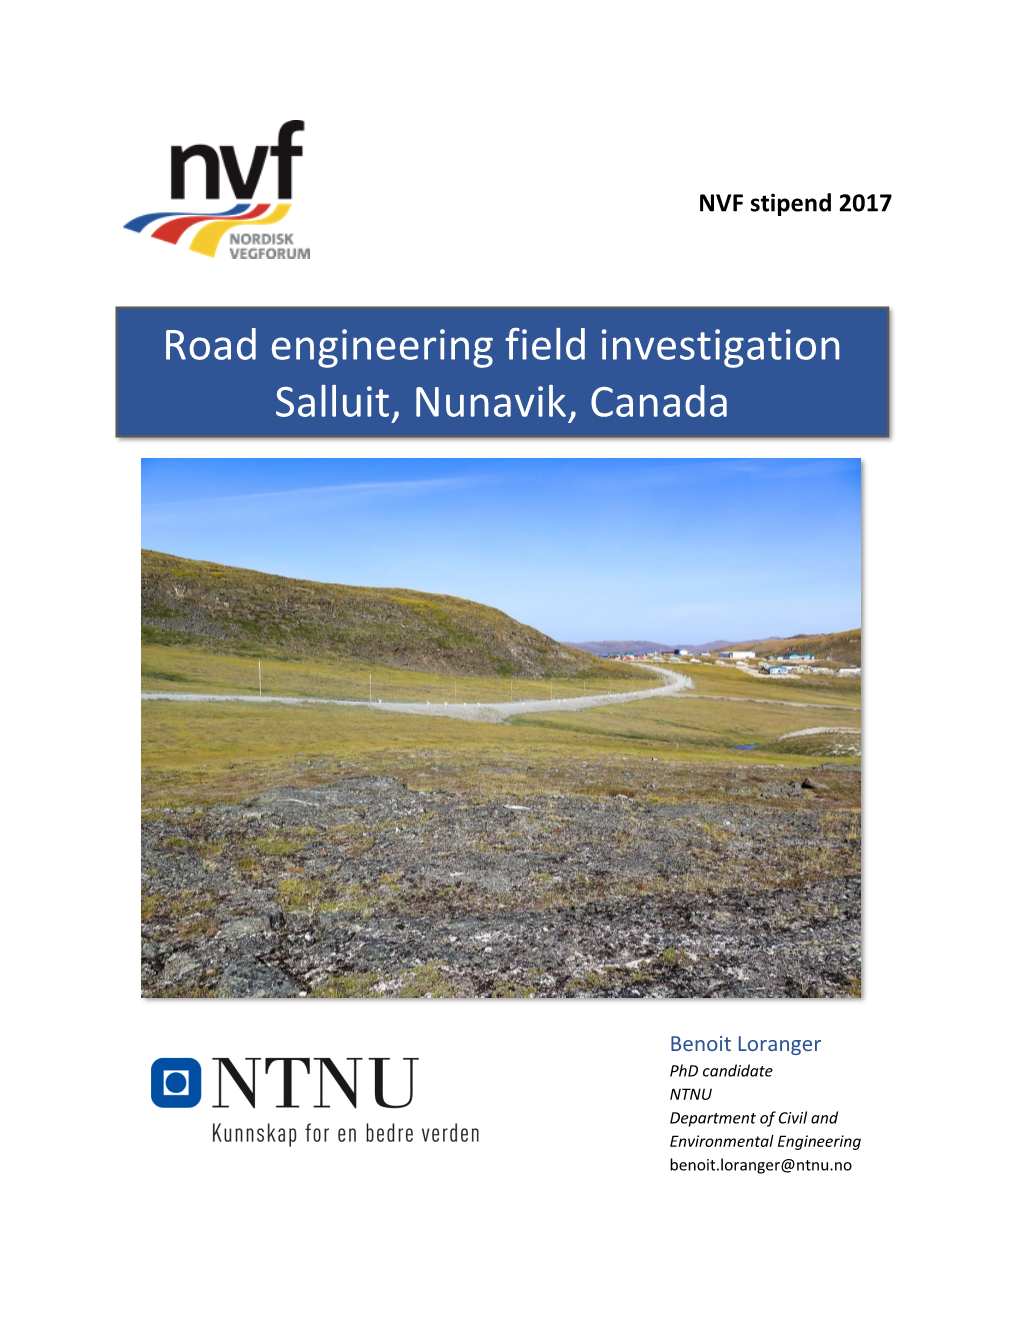 Road Engineering Field Investigation Salluit, Nunavik, Canada